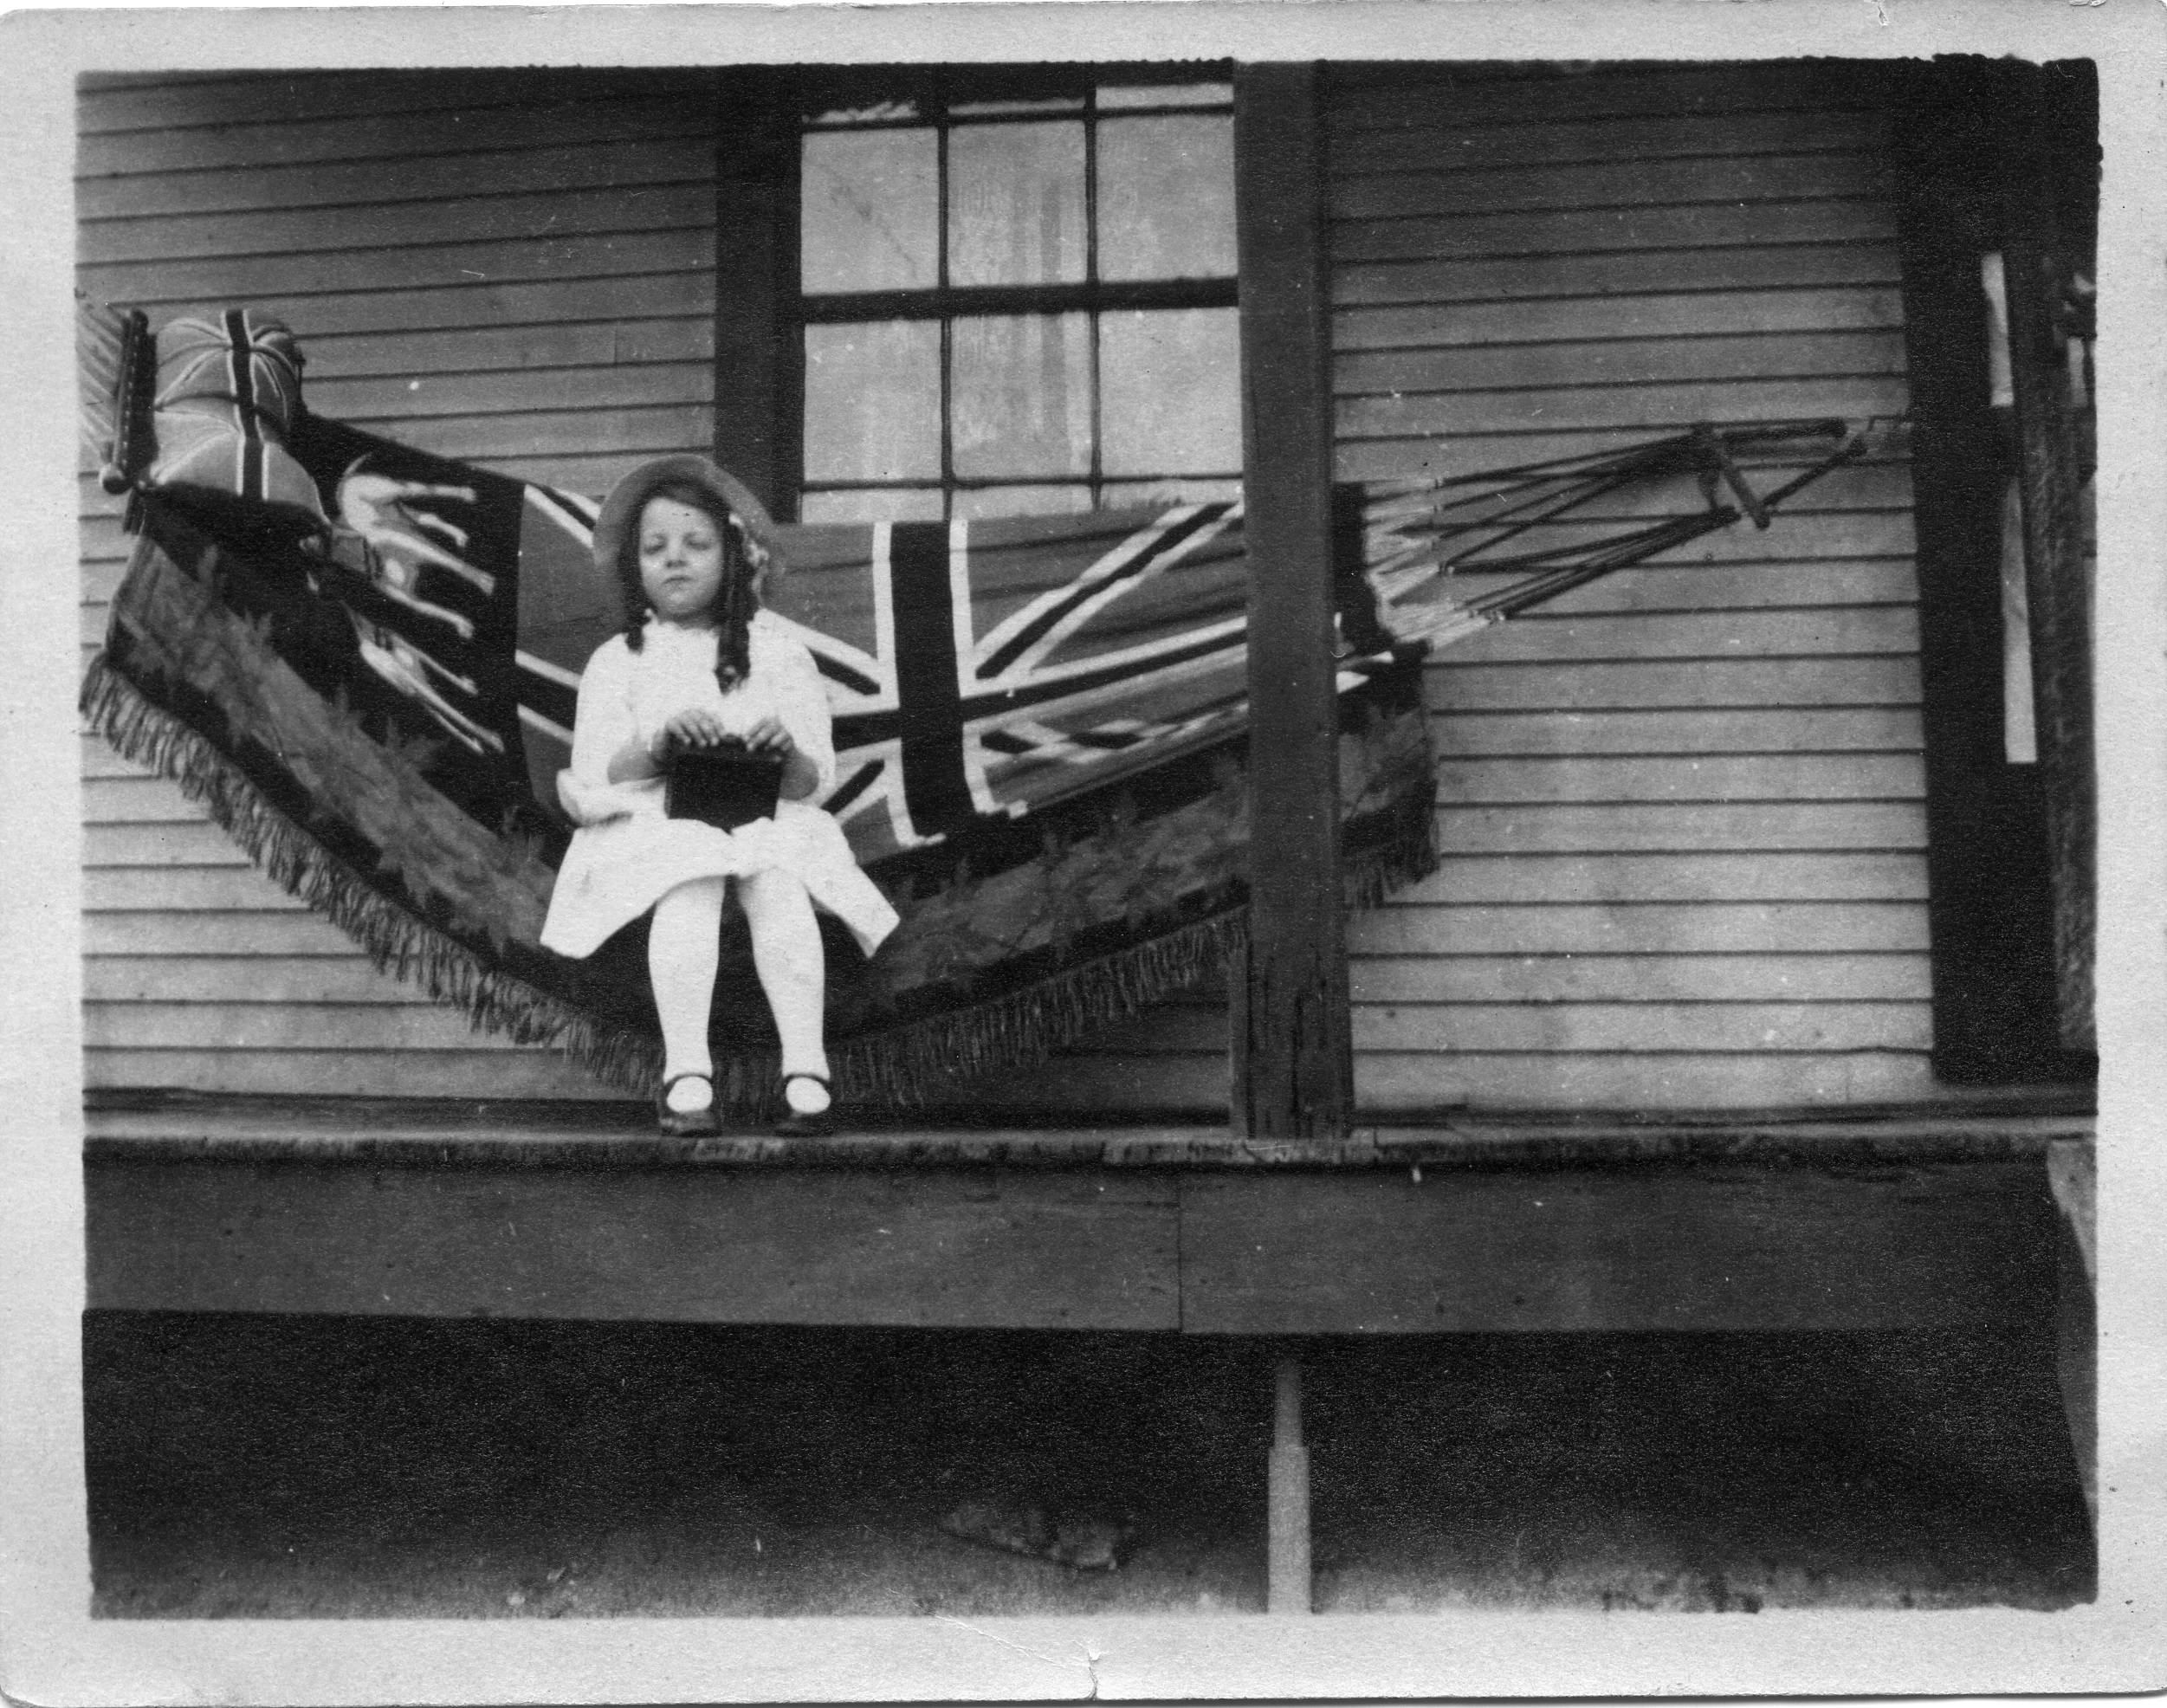 A child sitting in a hammock on a porch.